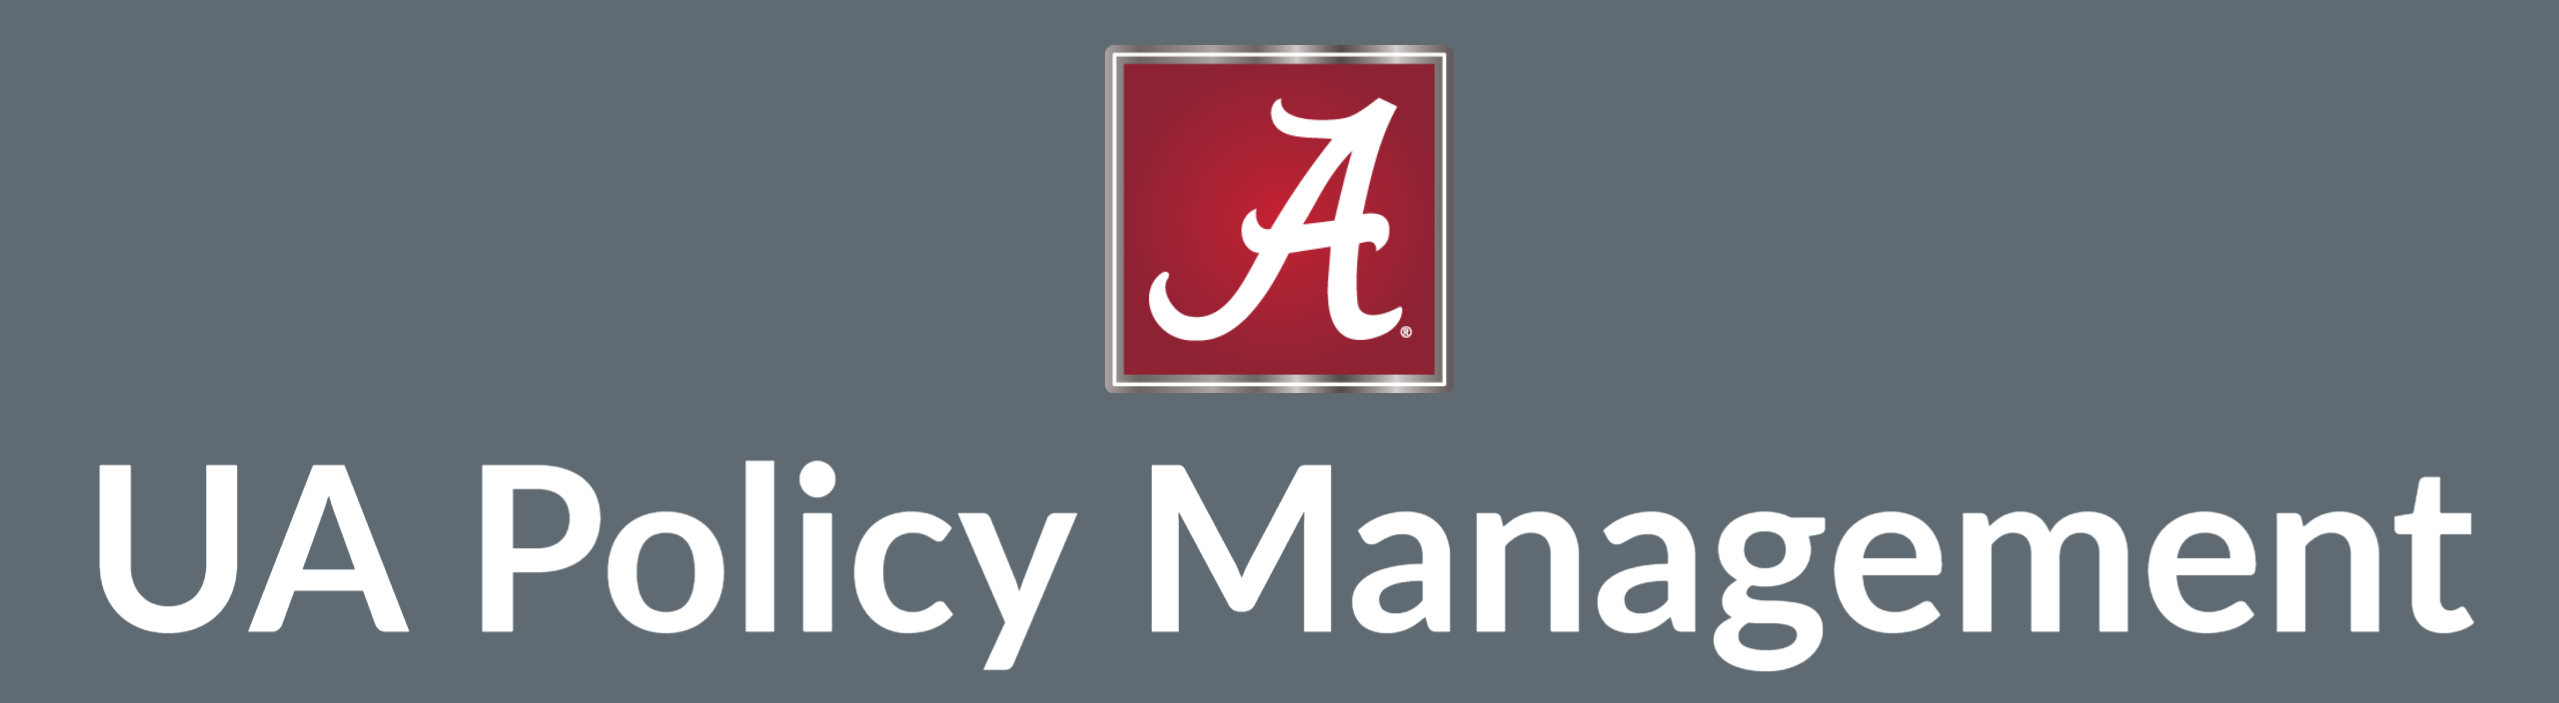 UA Policy Management